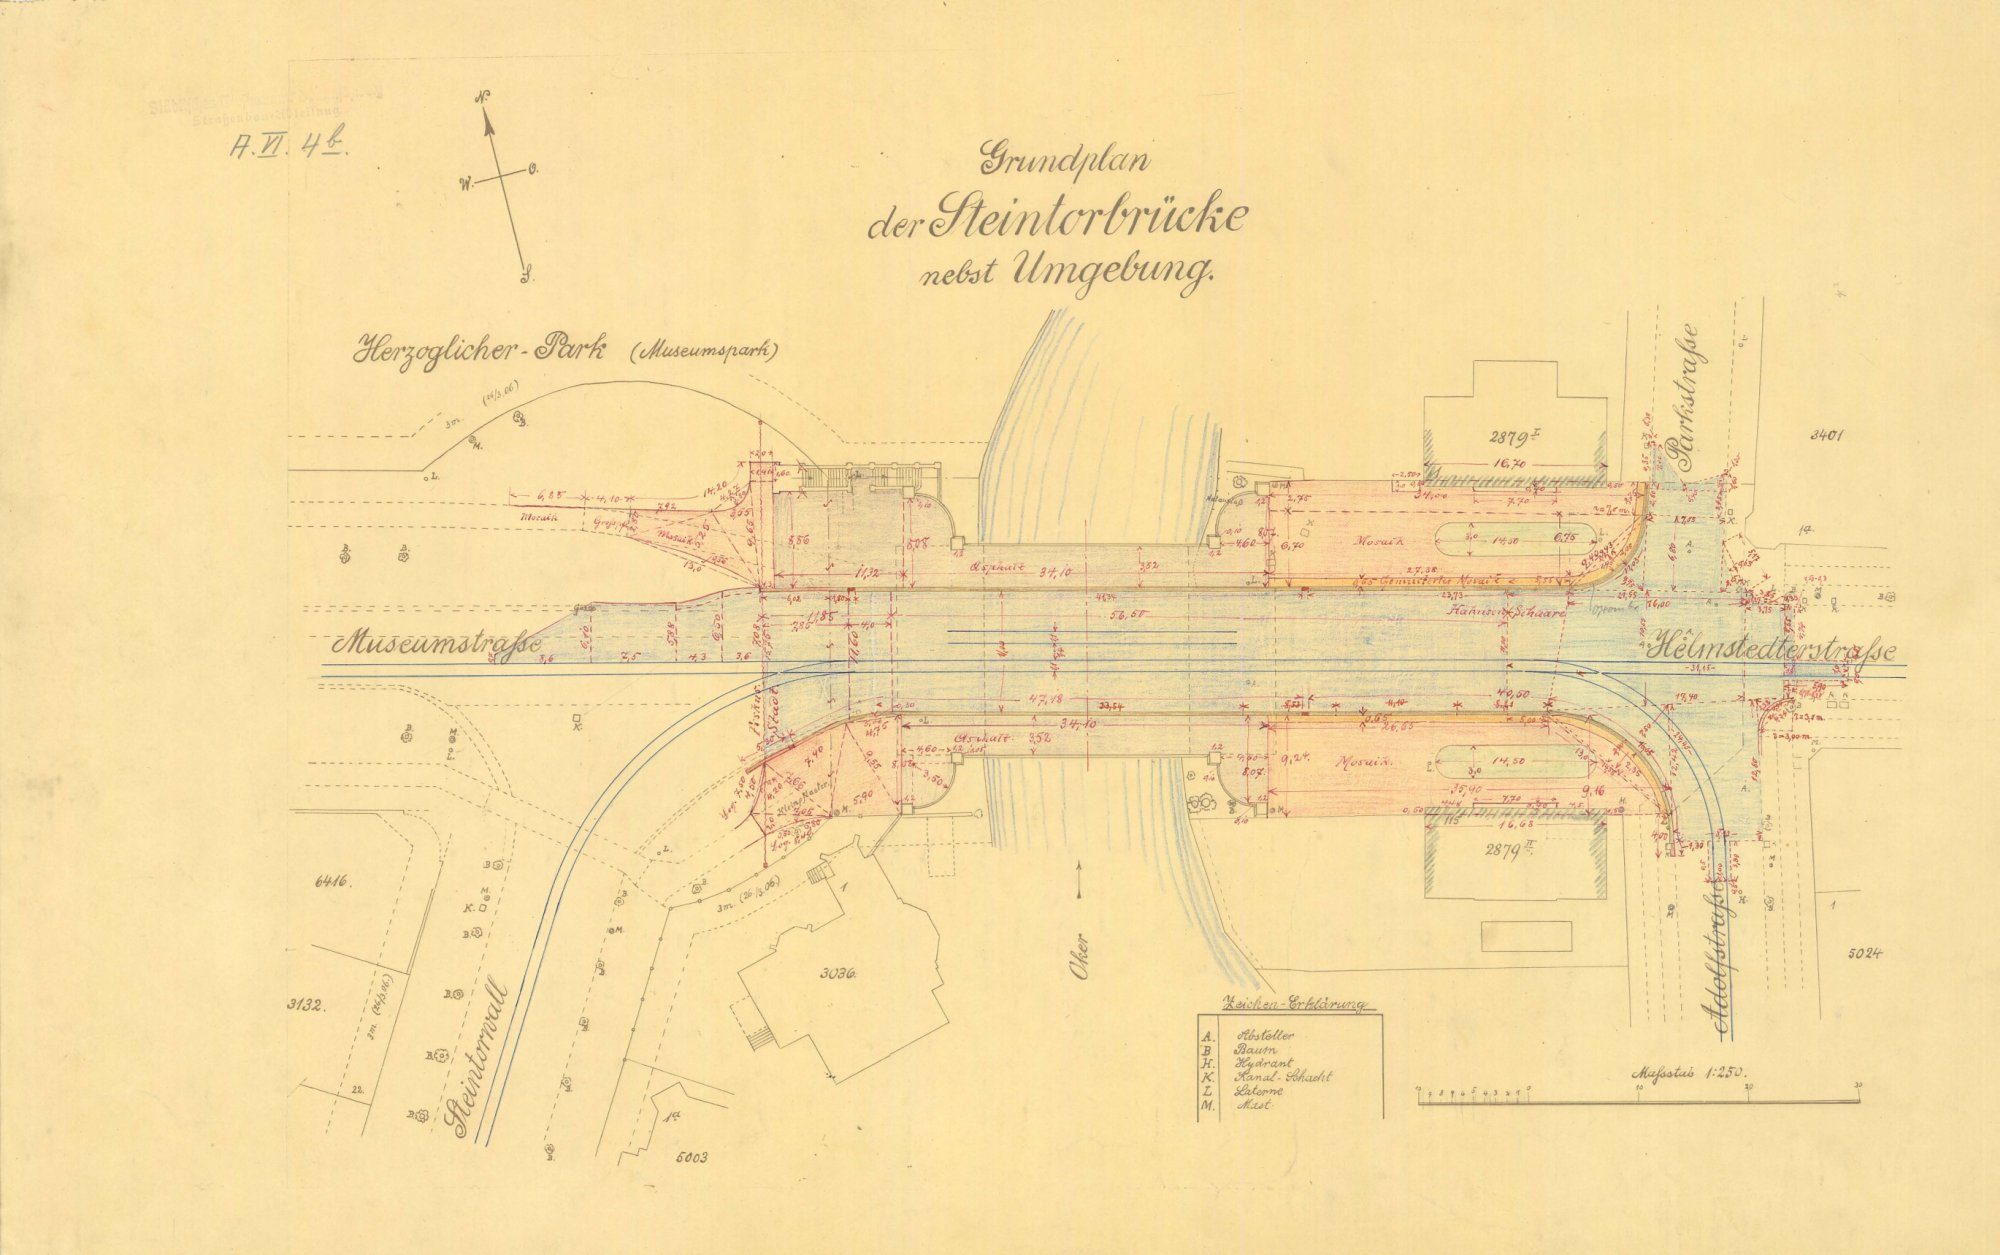 Steintorbrücke, Grundplan, 1914